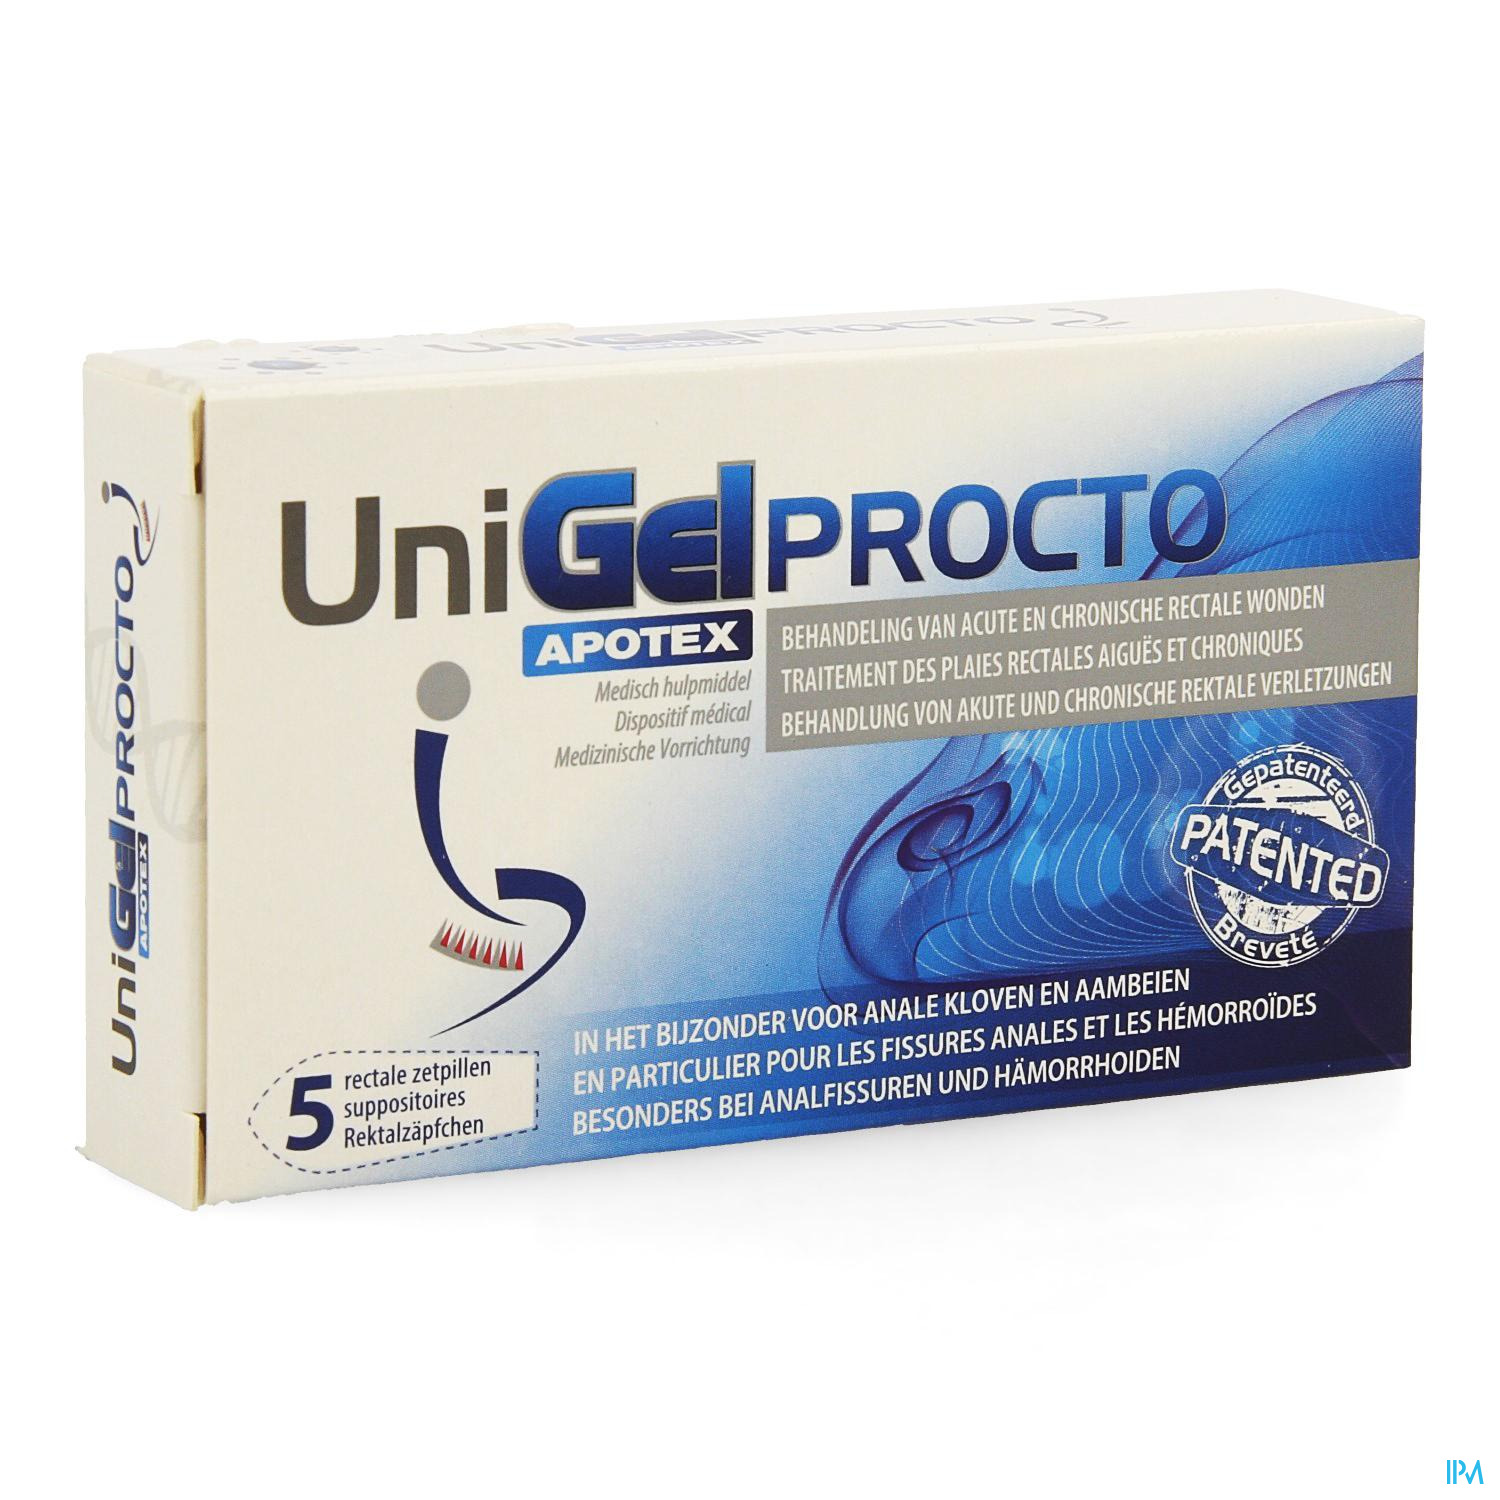 Unigel Apotex Procto Suppo 5 — Apotheek De Splenter Etikhove 6201